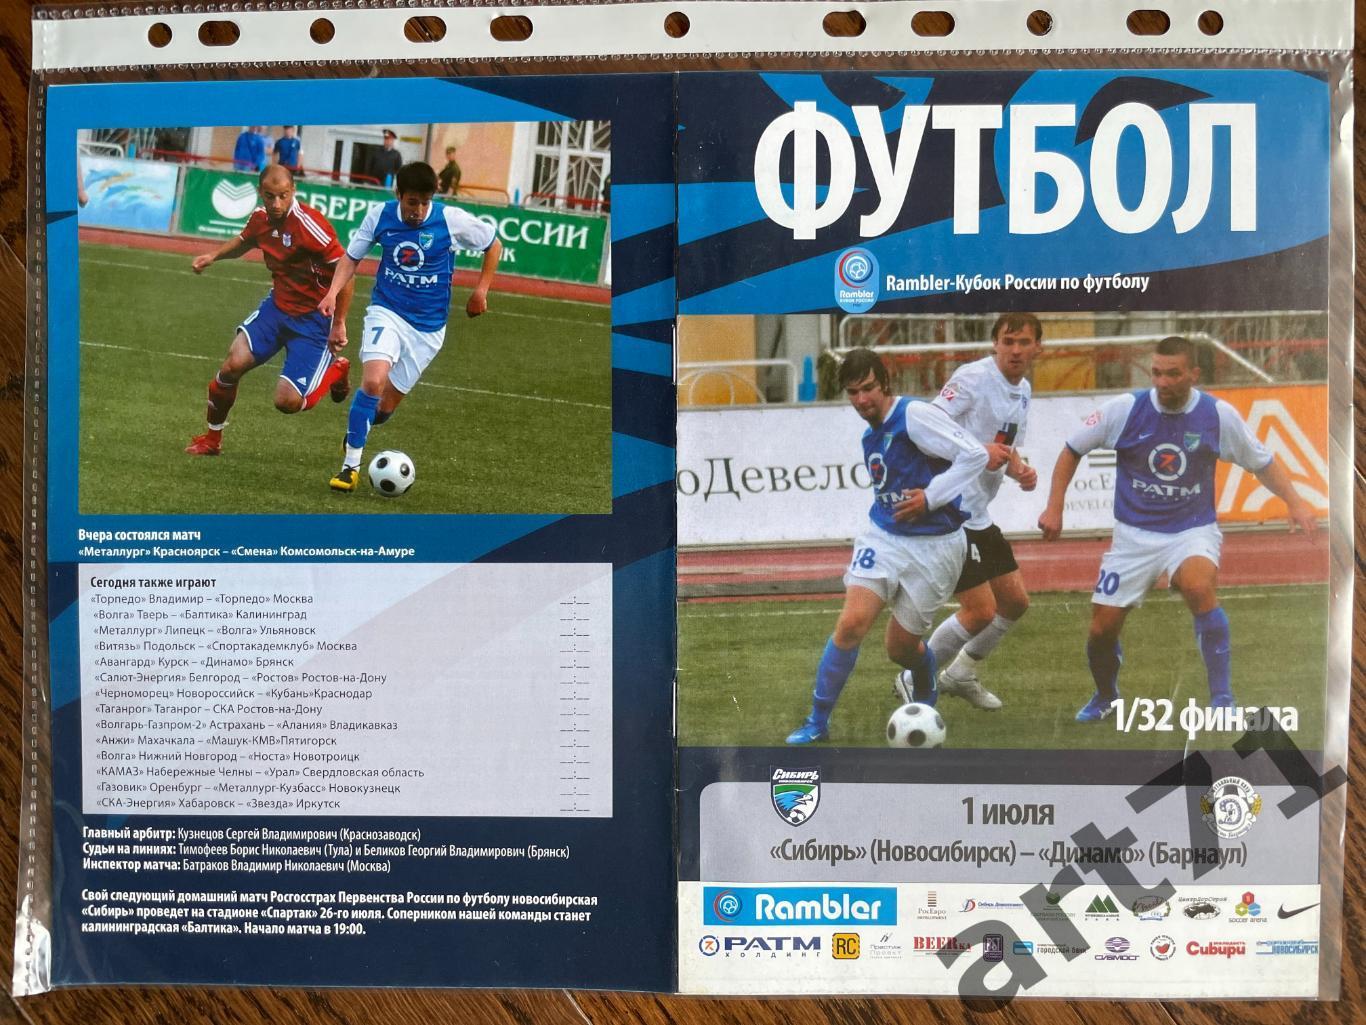 + Сибирь Новосибирск - Динамо Барнаул 2008 Кубок России